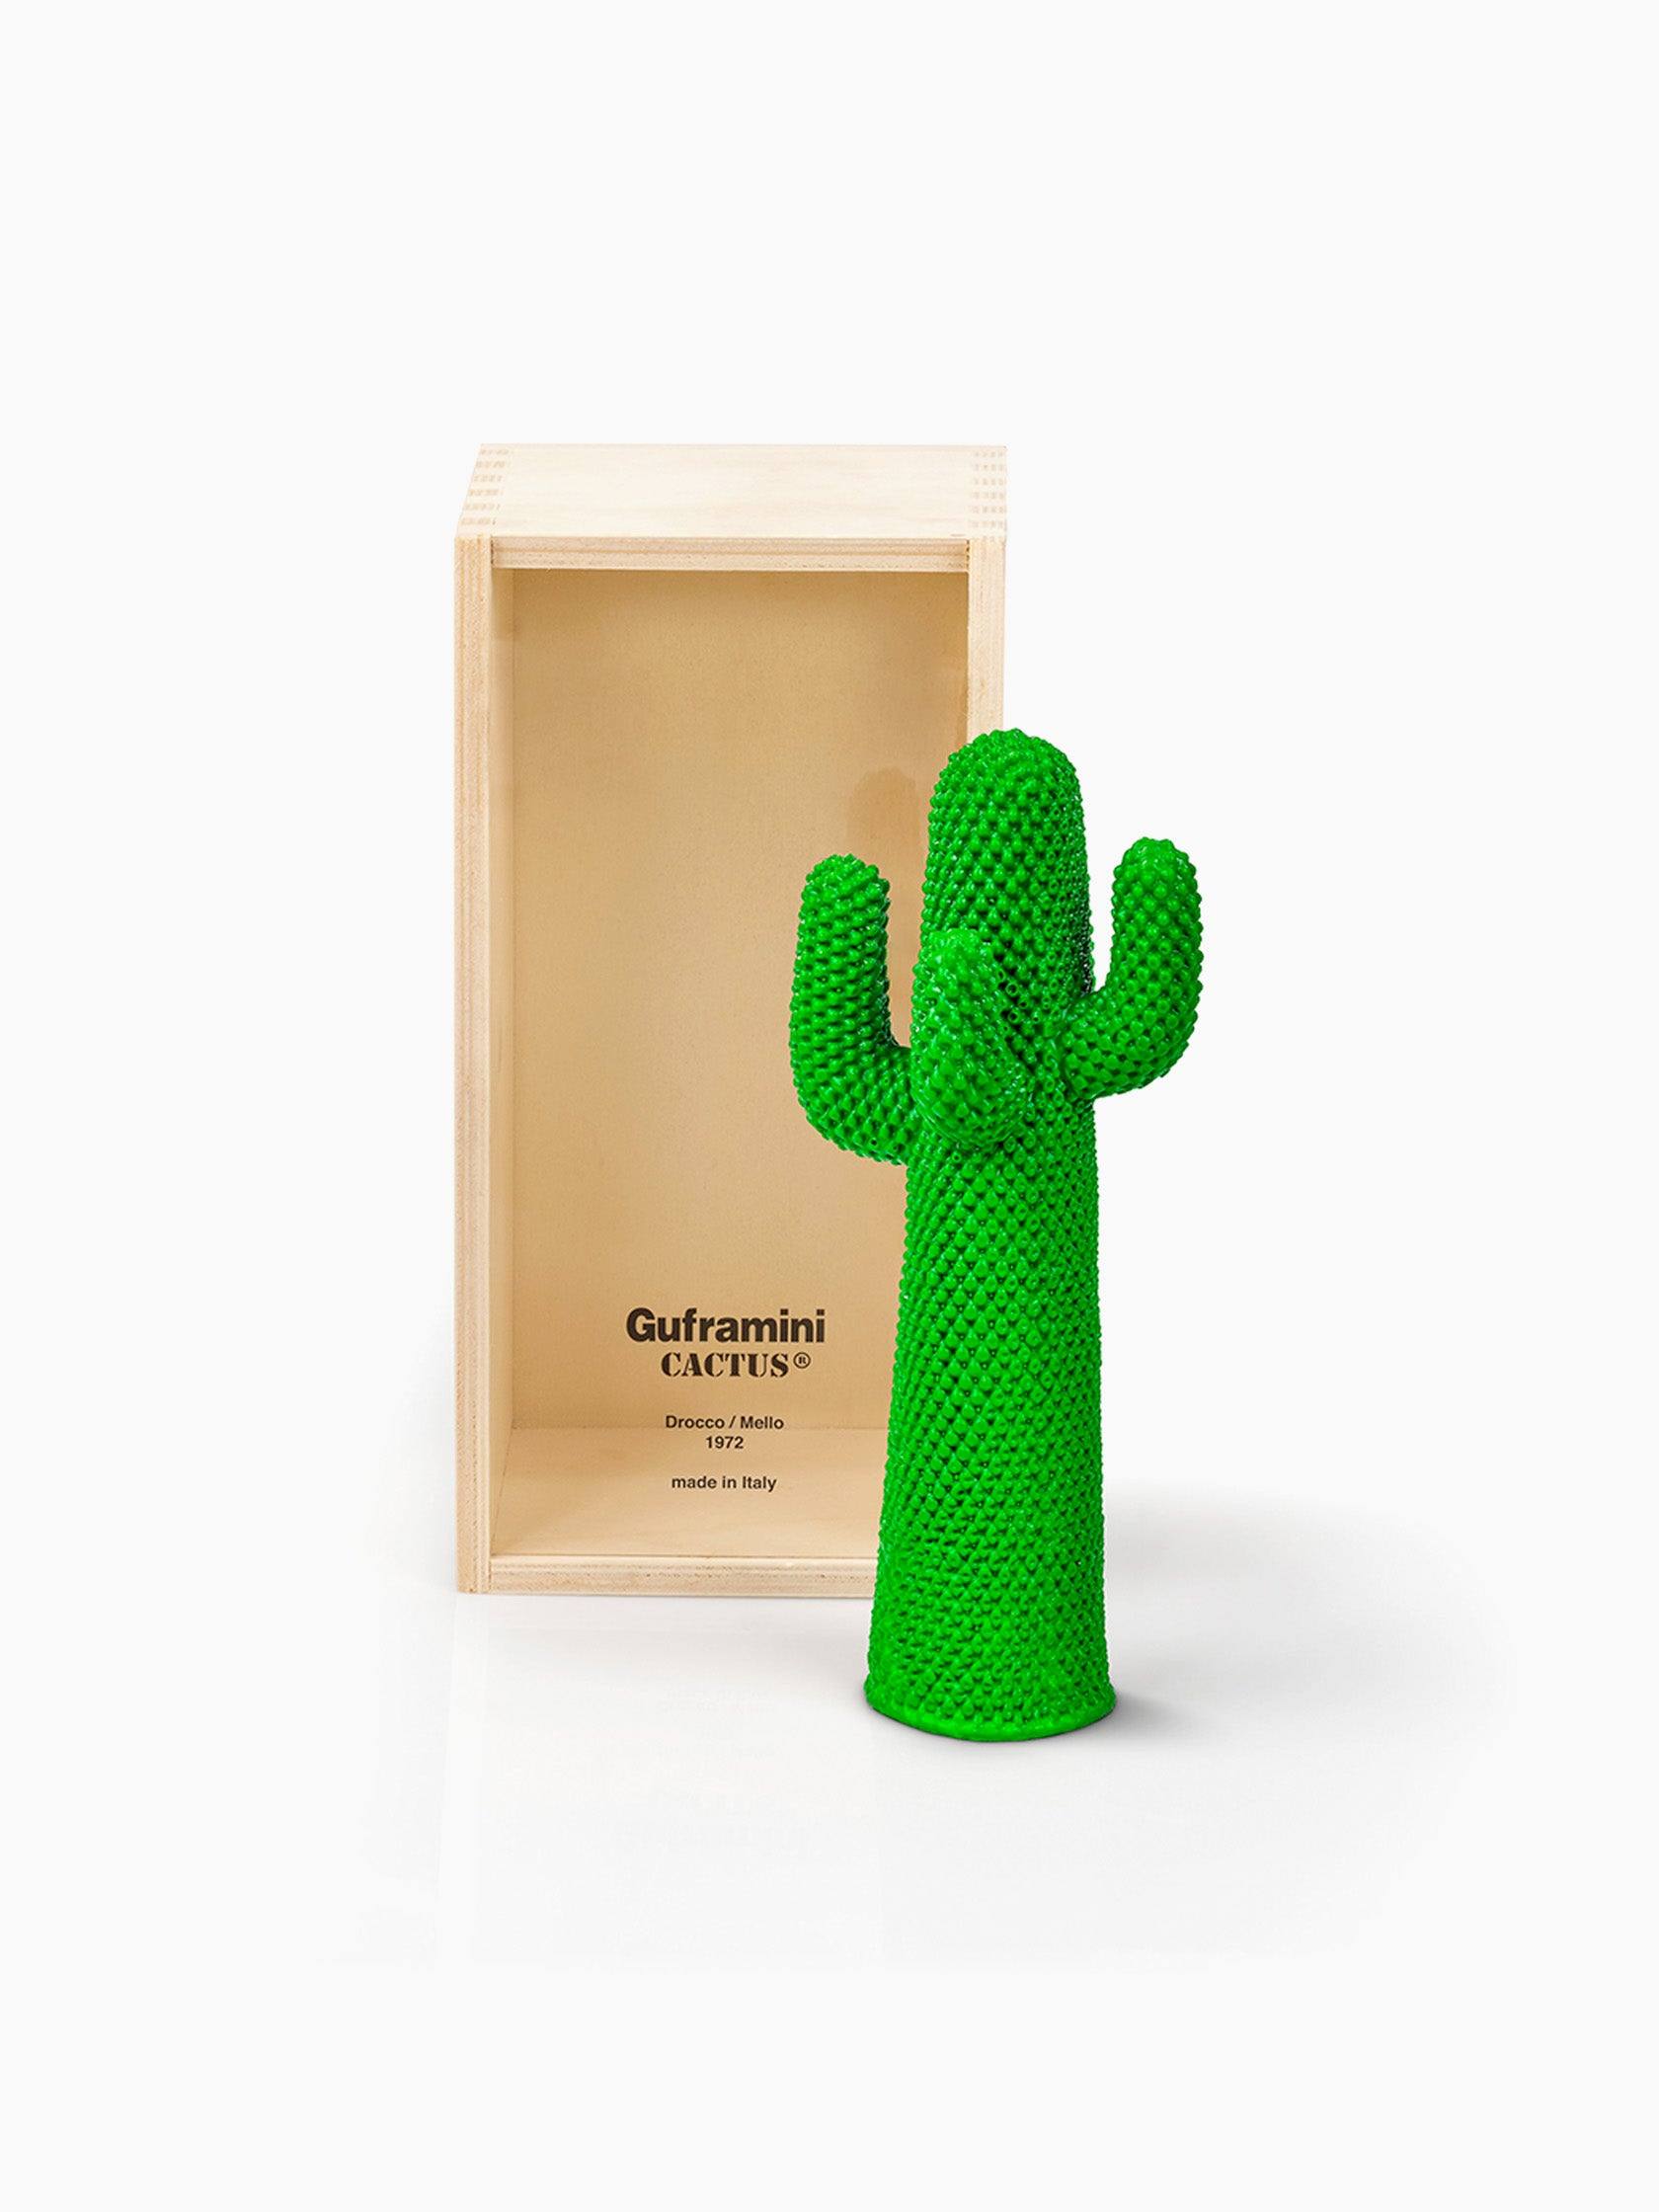 Guframini Cactus Green by Gufram - Mankovsky Gallery